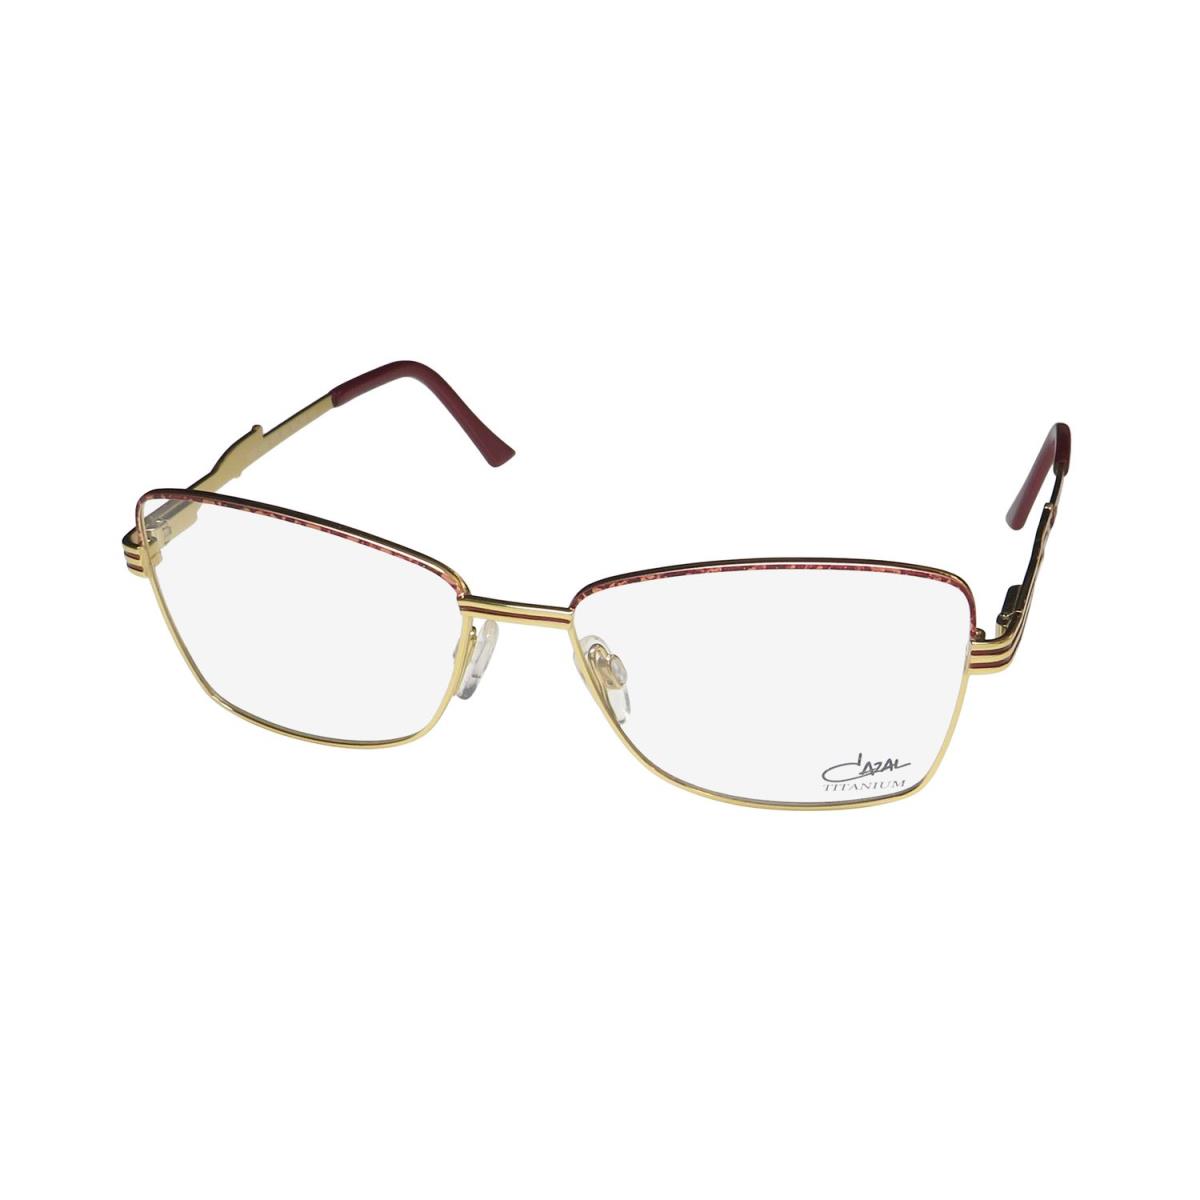 Cazal 4291 Titanium Made IN Germany Premium Quality Sleek Eyeglass Frame/glasses Bordeaux / Gold